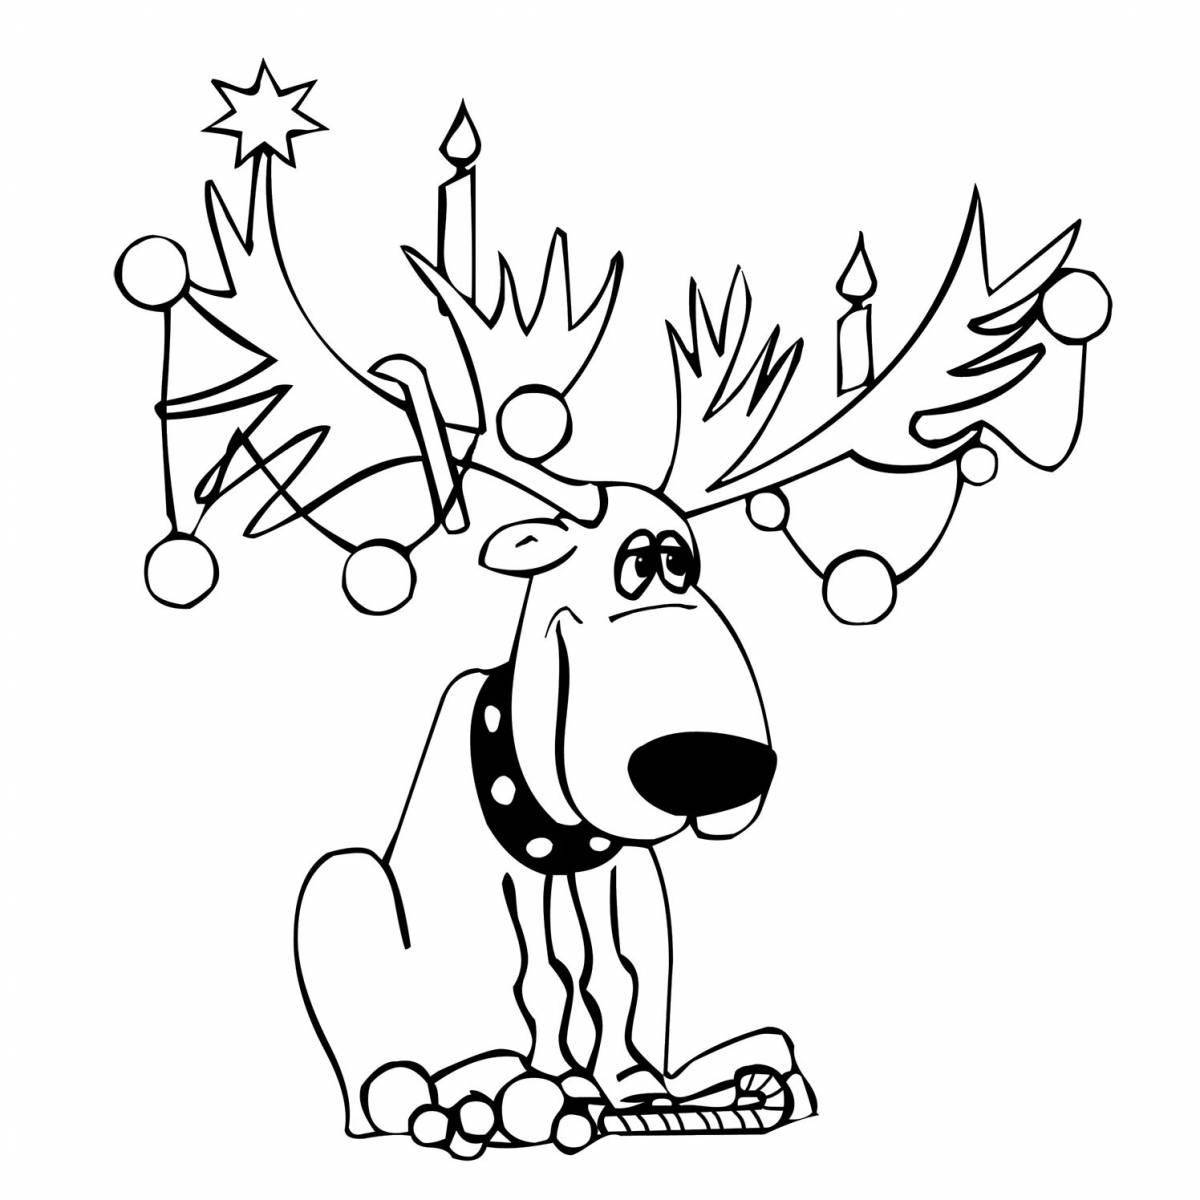 Coloring book a fascinating Christmas deer